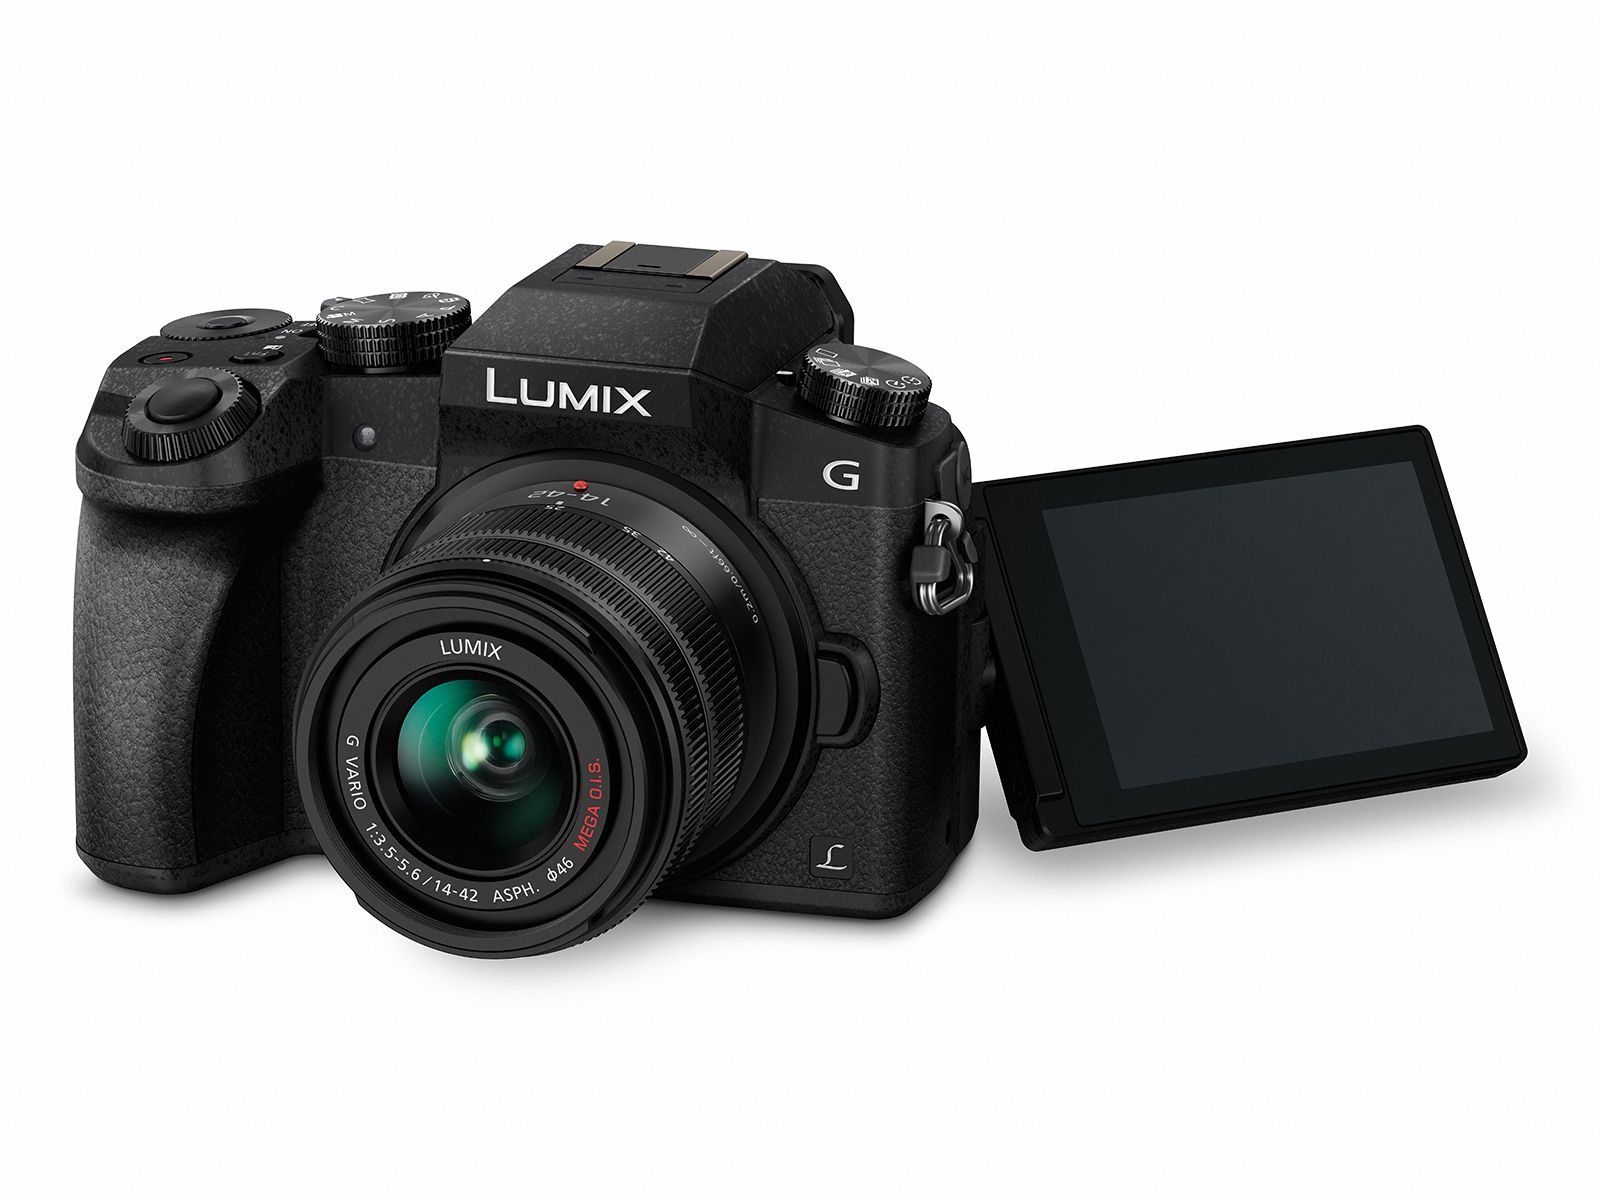 panasonic lumix g7 targets videographers with 4k video capability image 1